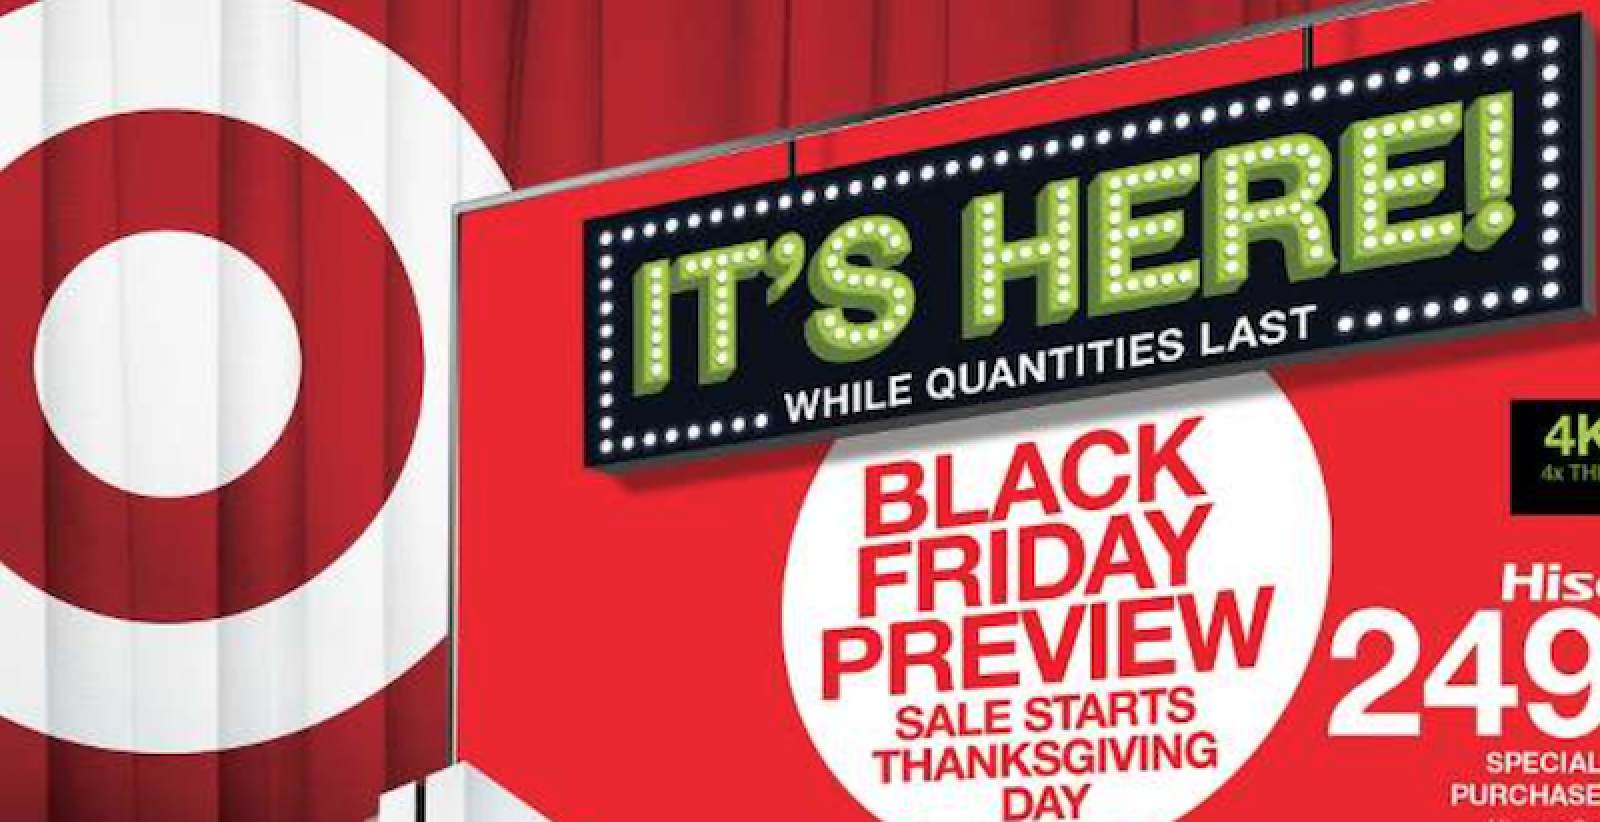 Target Black Friday Deals Include iPad Pro, Apple TV and Beats - MacRumors